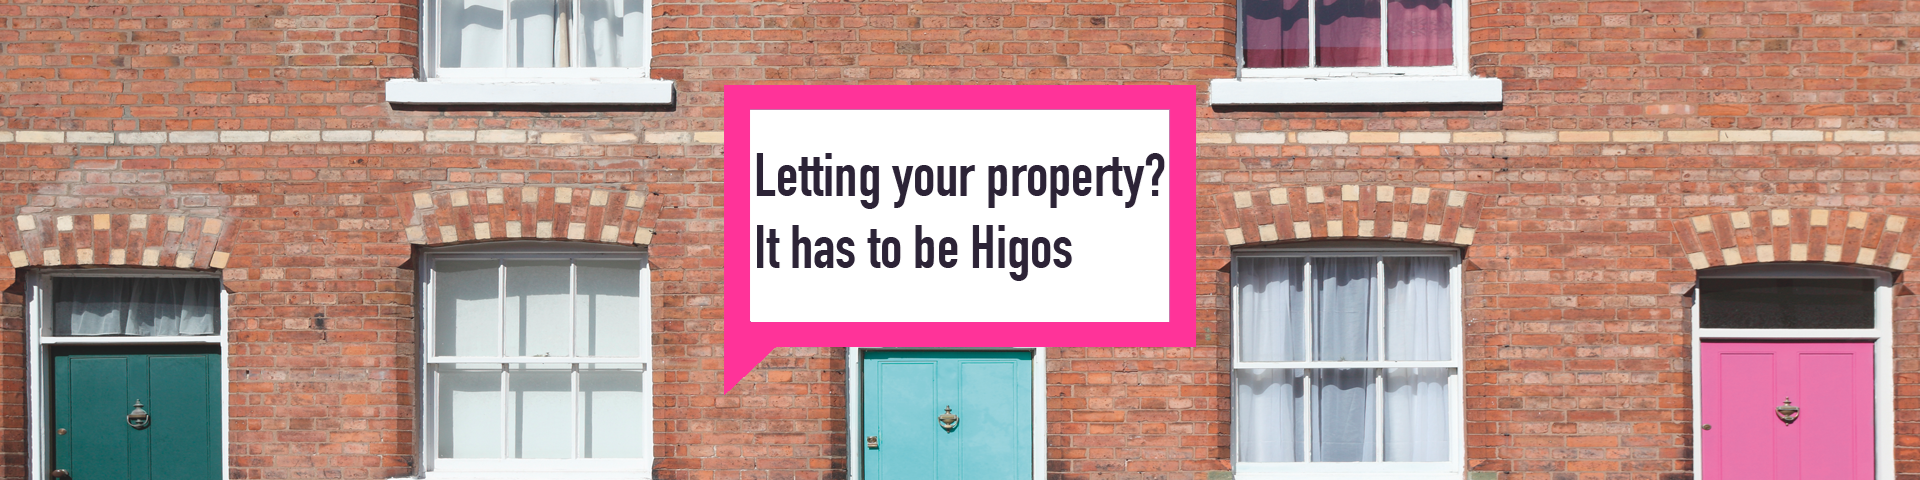 Higos let property insurance.